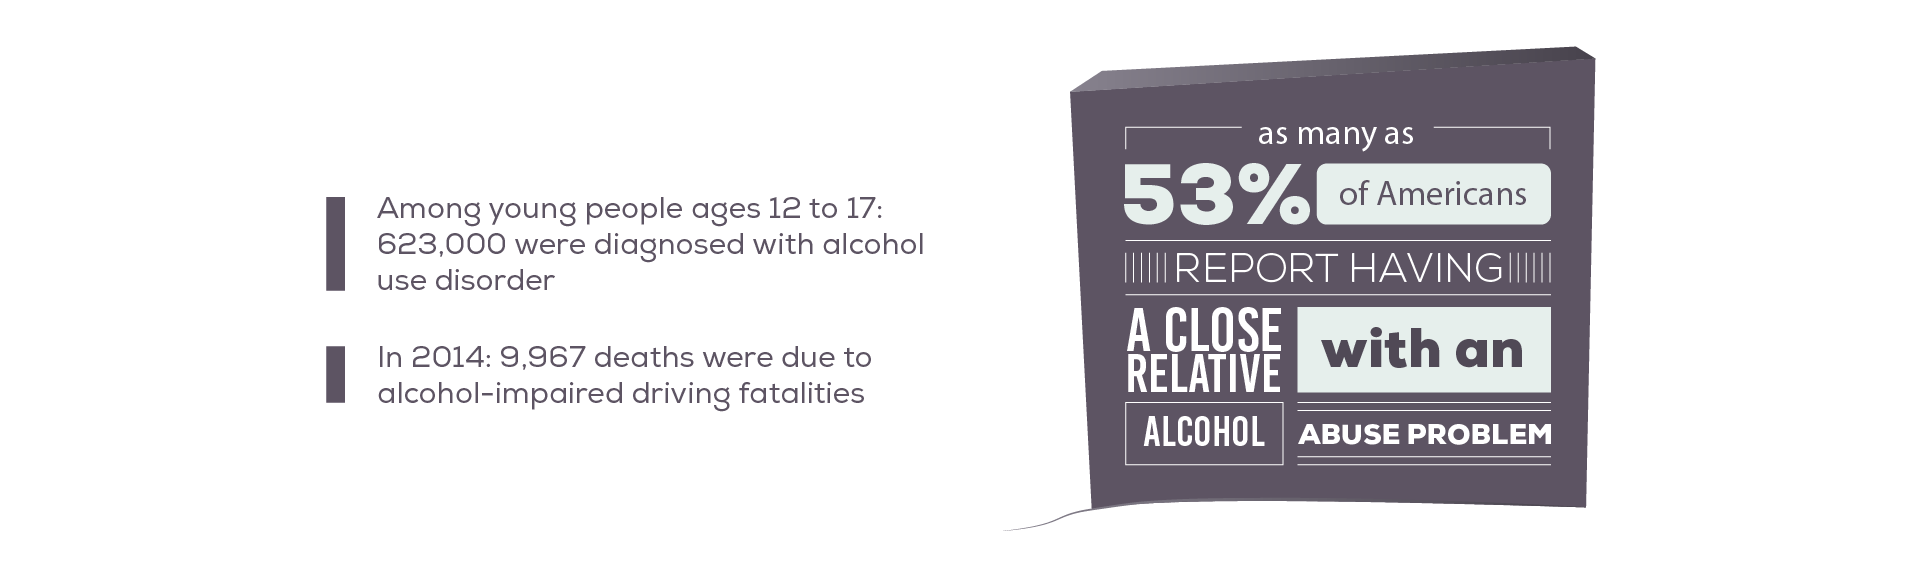 More Alcoholism Statistics In The U.S